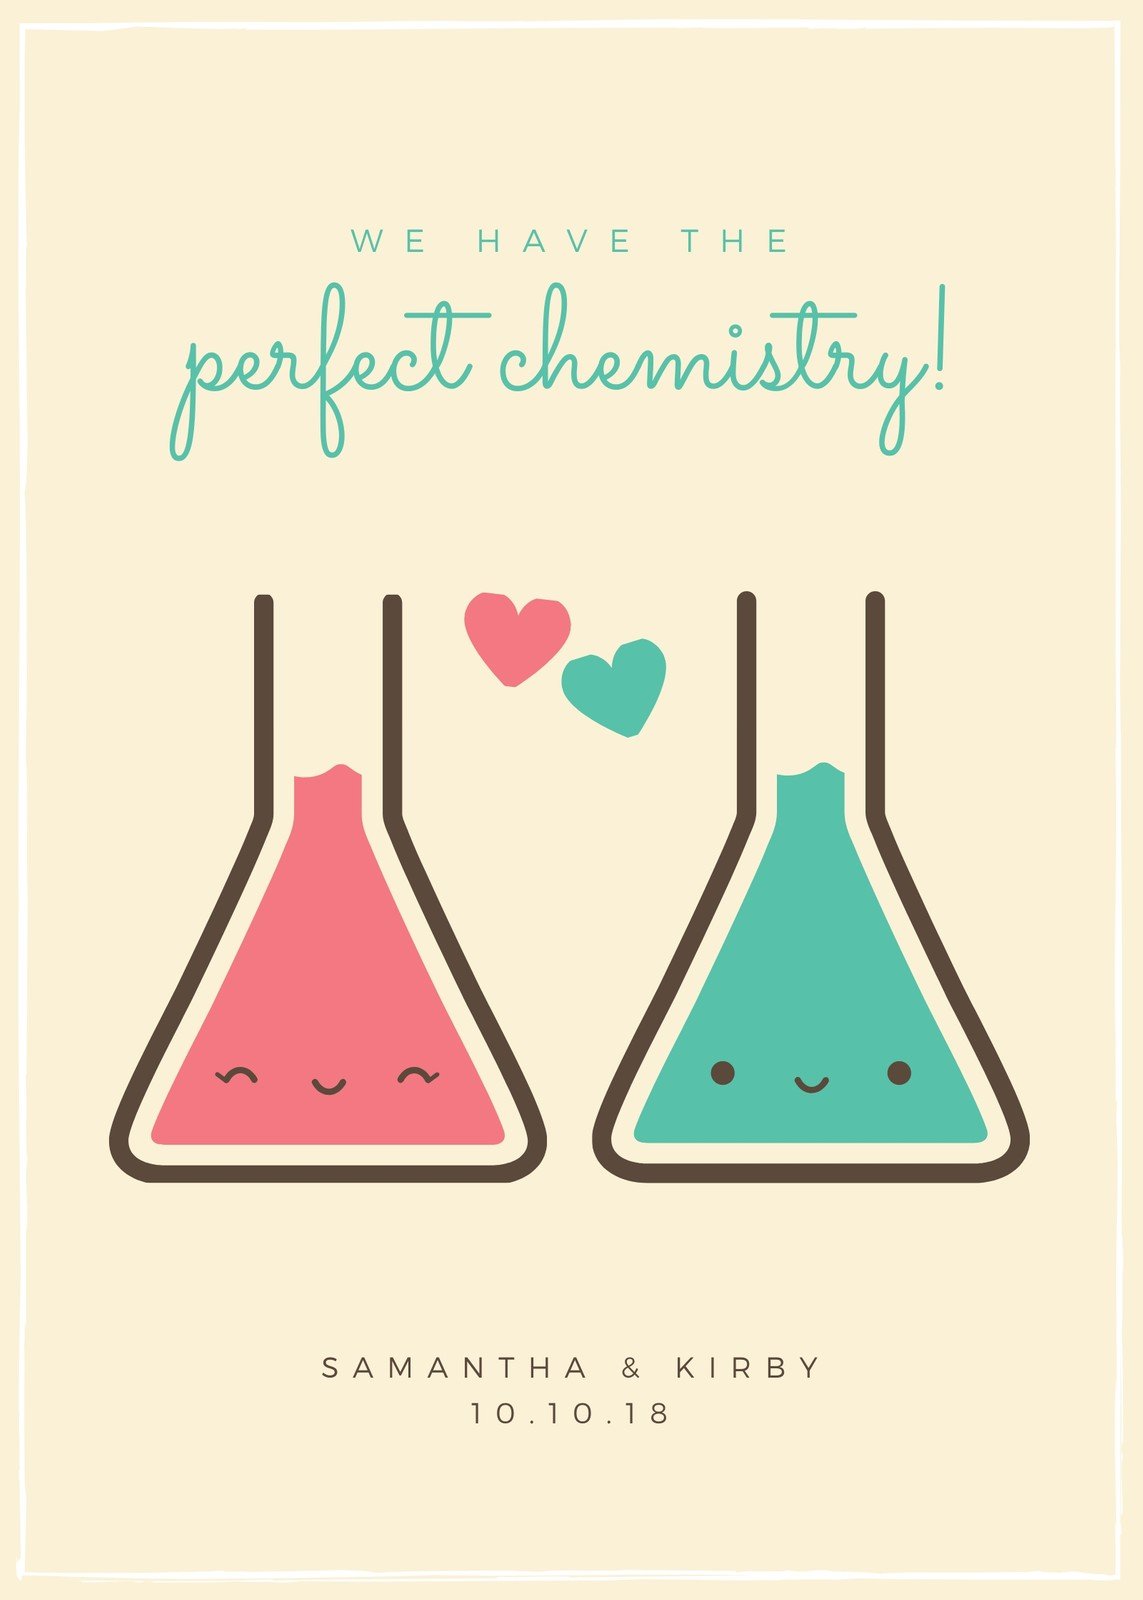 chemistry love equations